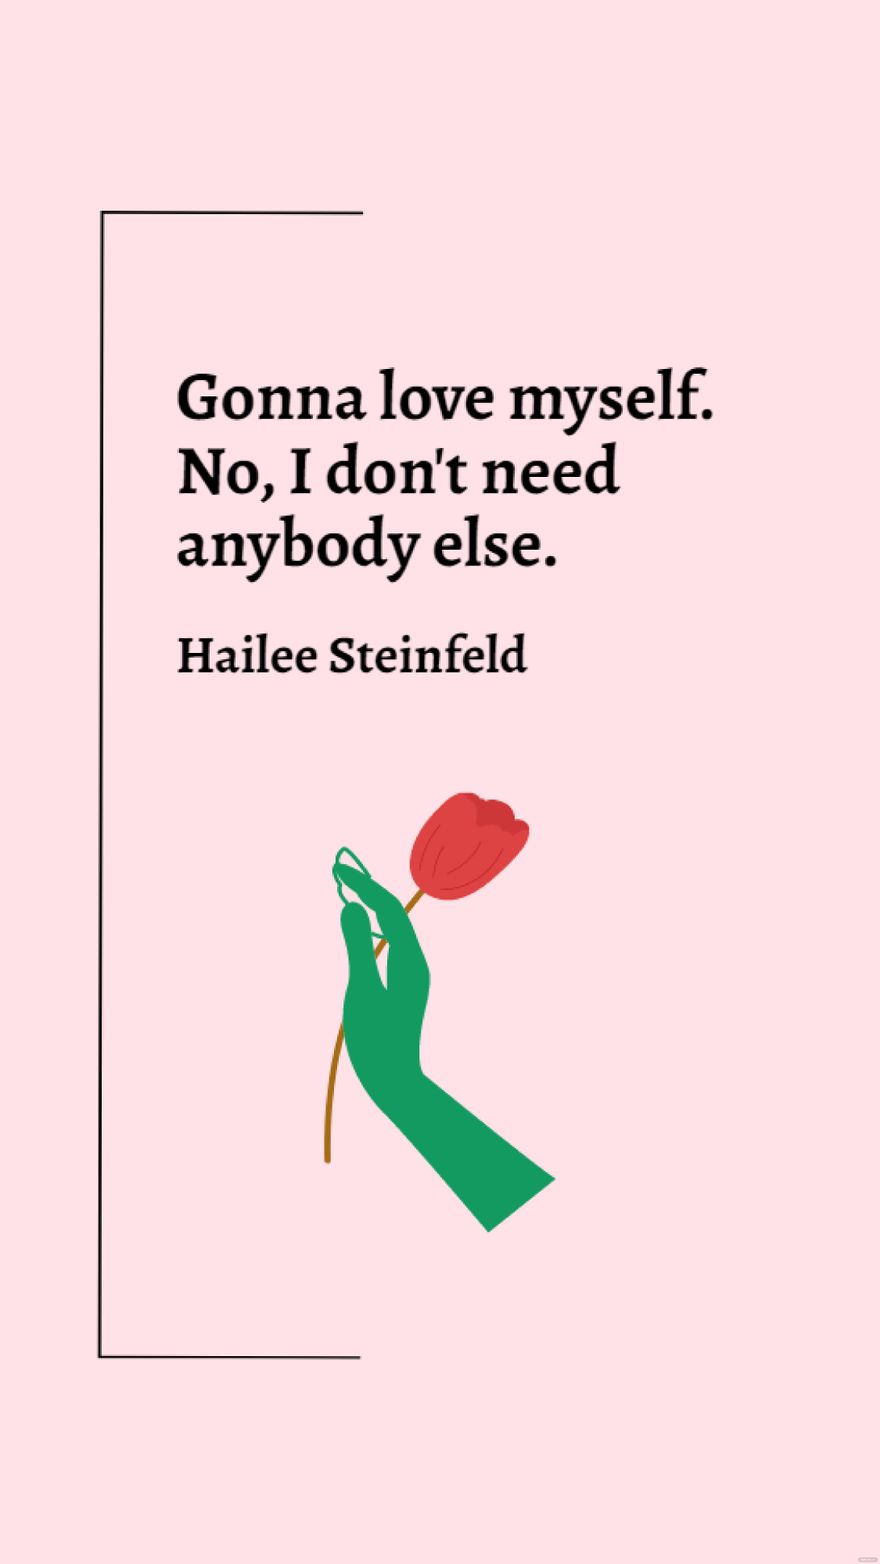 Hailee Steinfeld - Gonna love myself. No, I don't need anybody else.